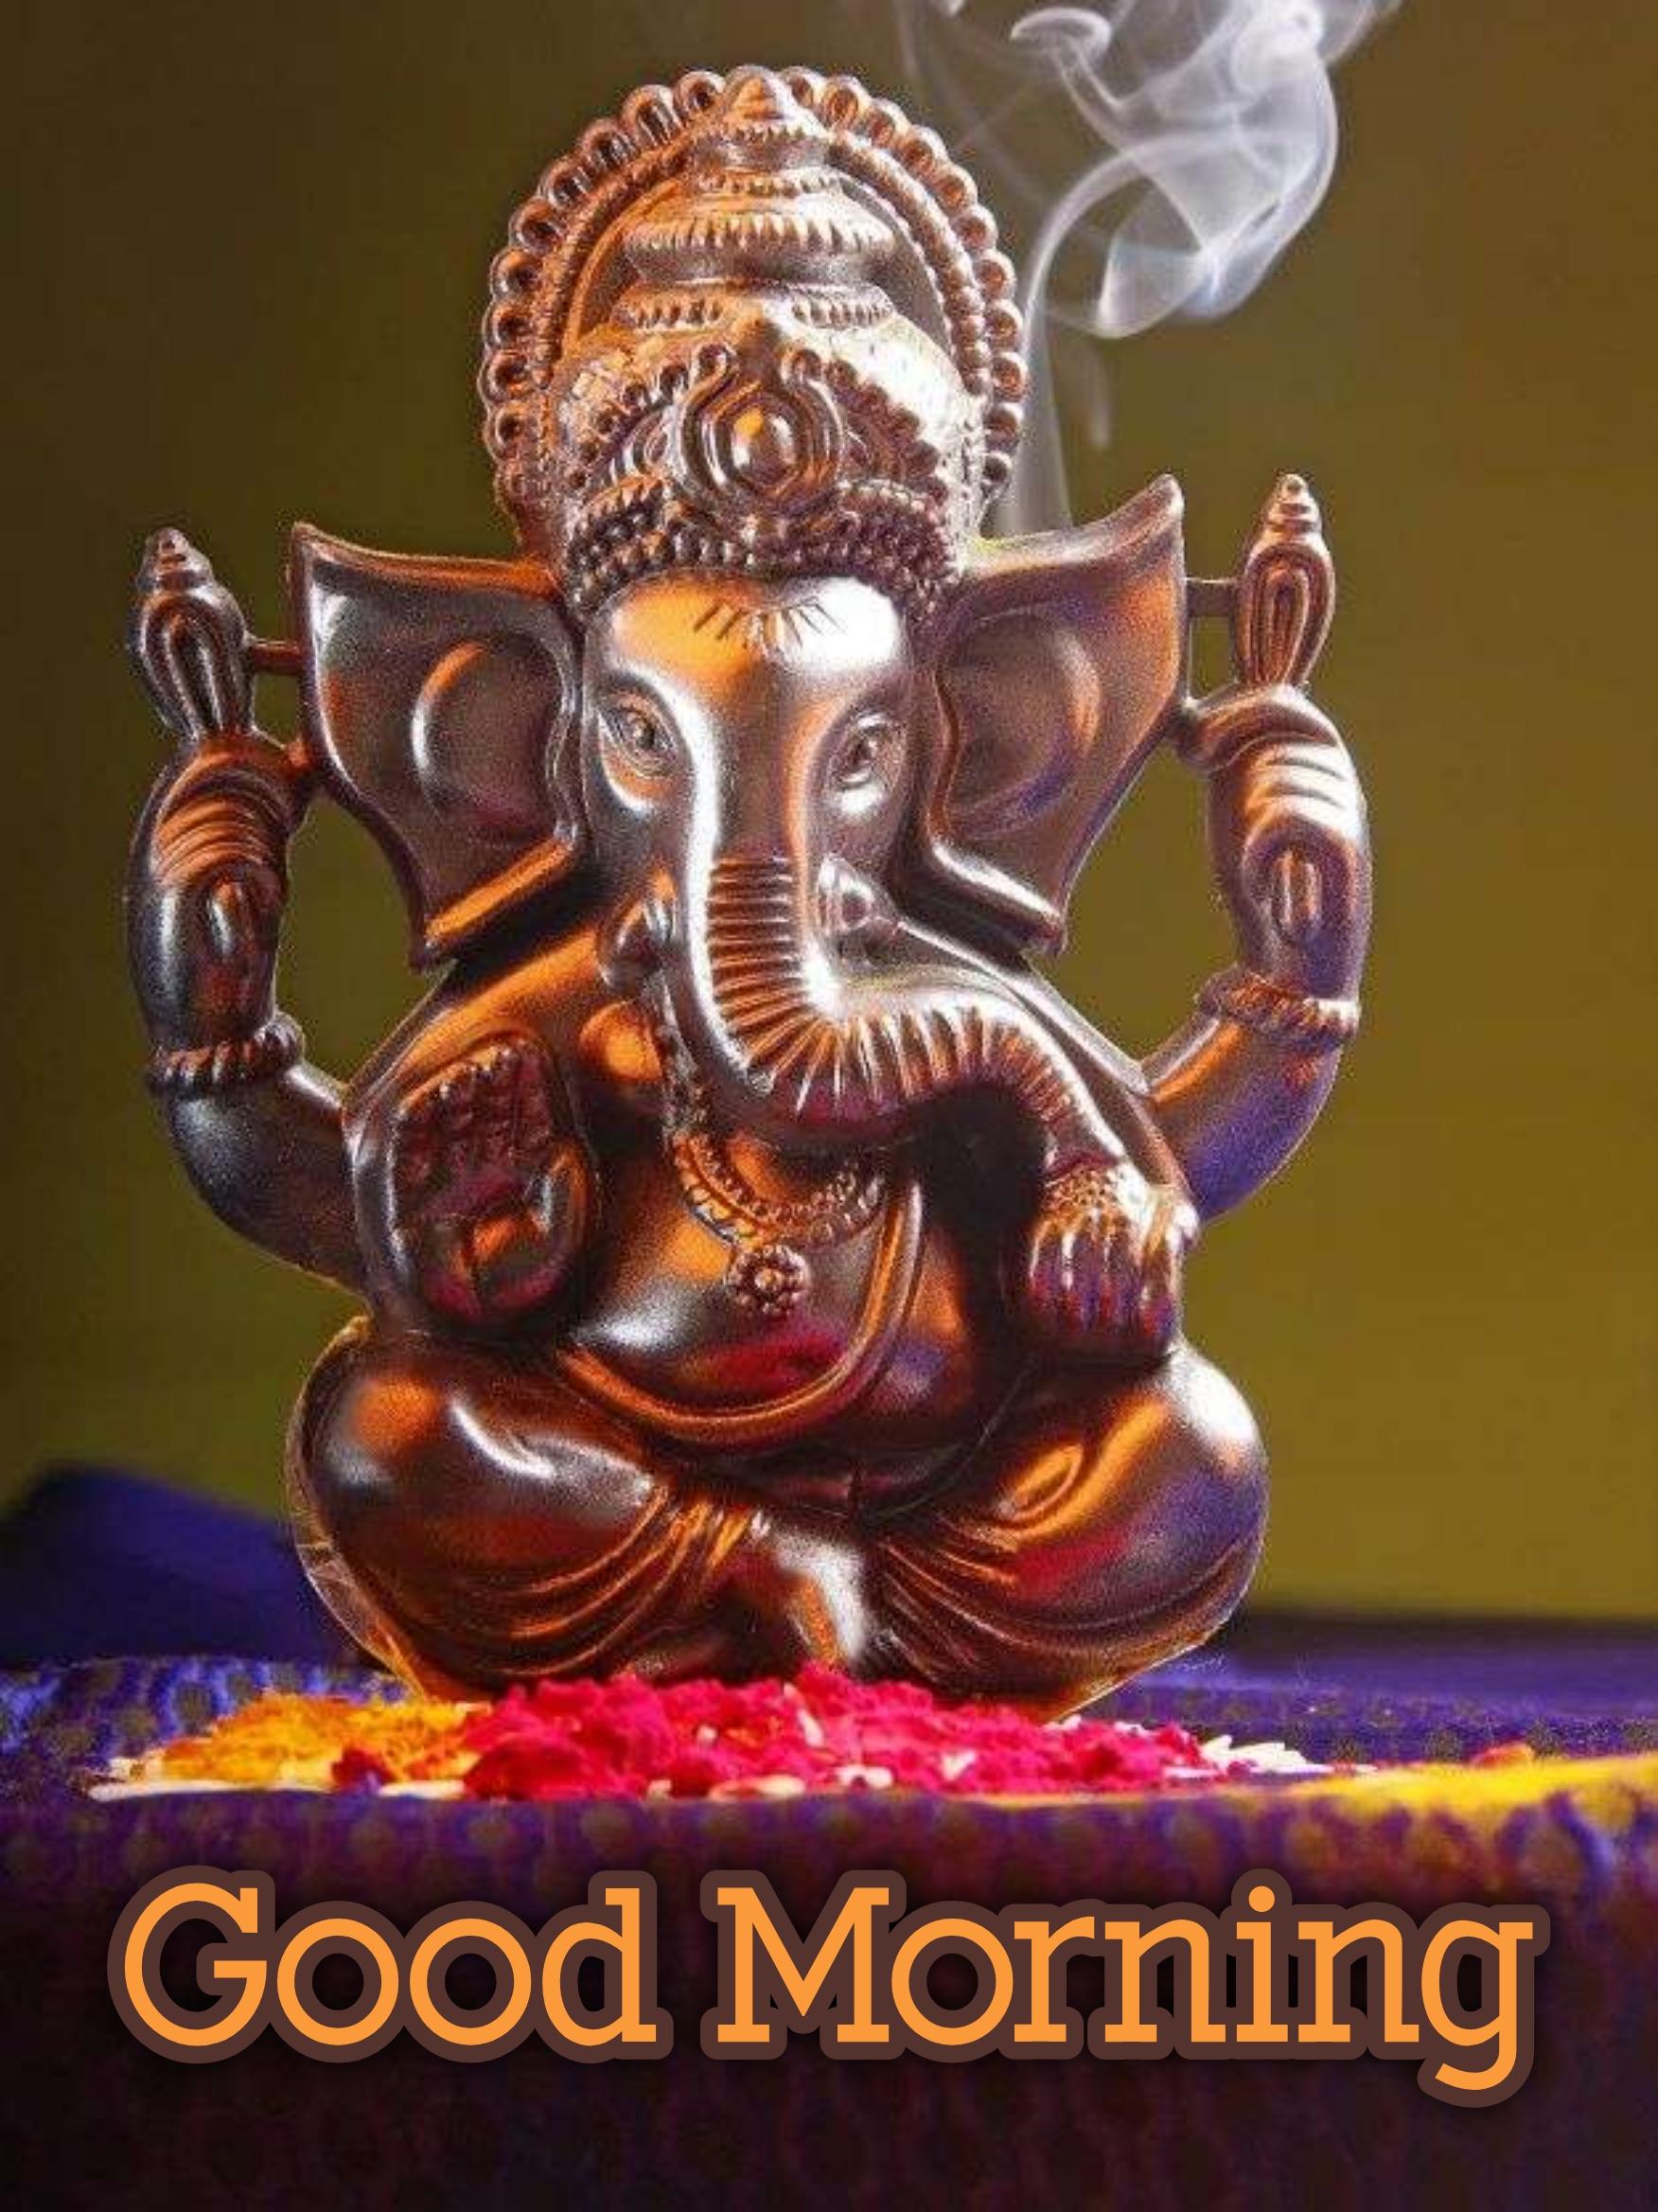 Good Morning Images Of Ganesh